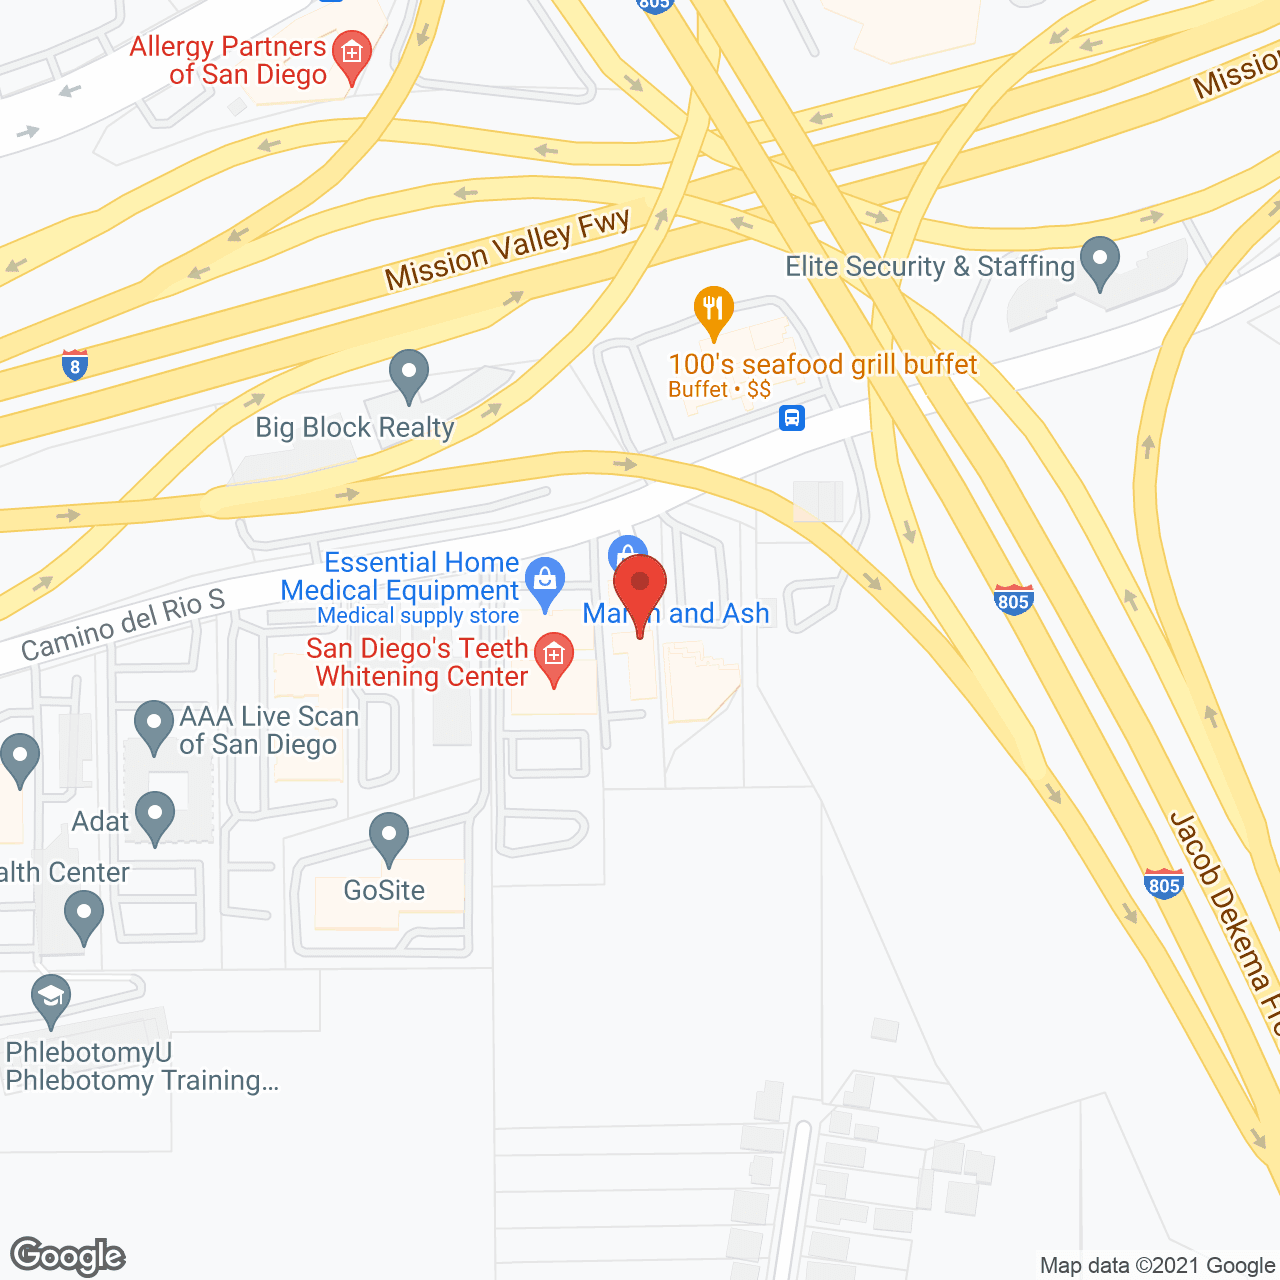 Mobile Nurse San Diego in google map